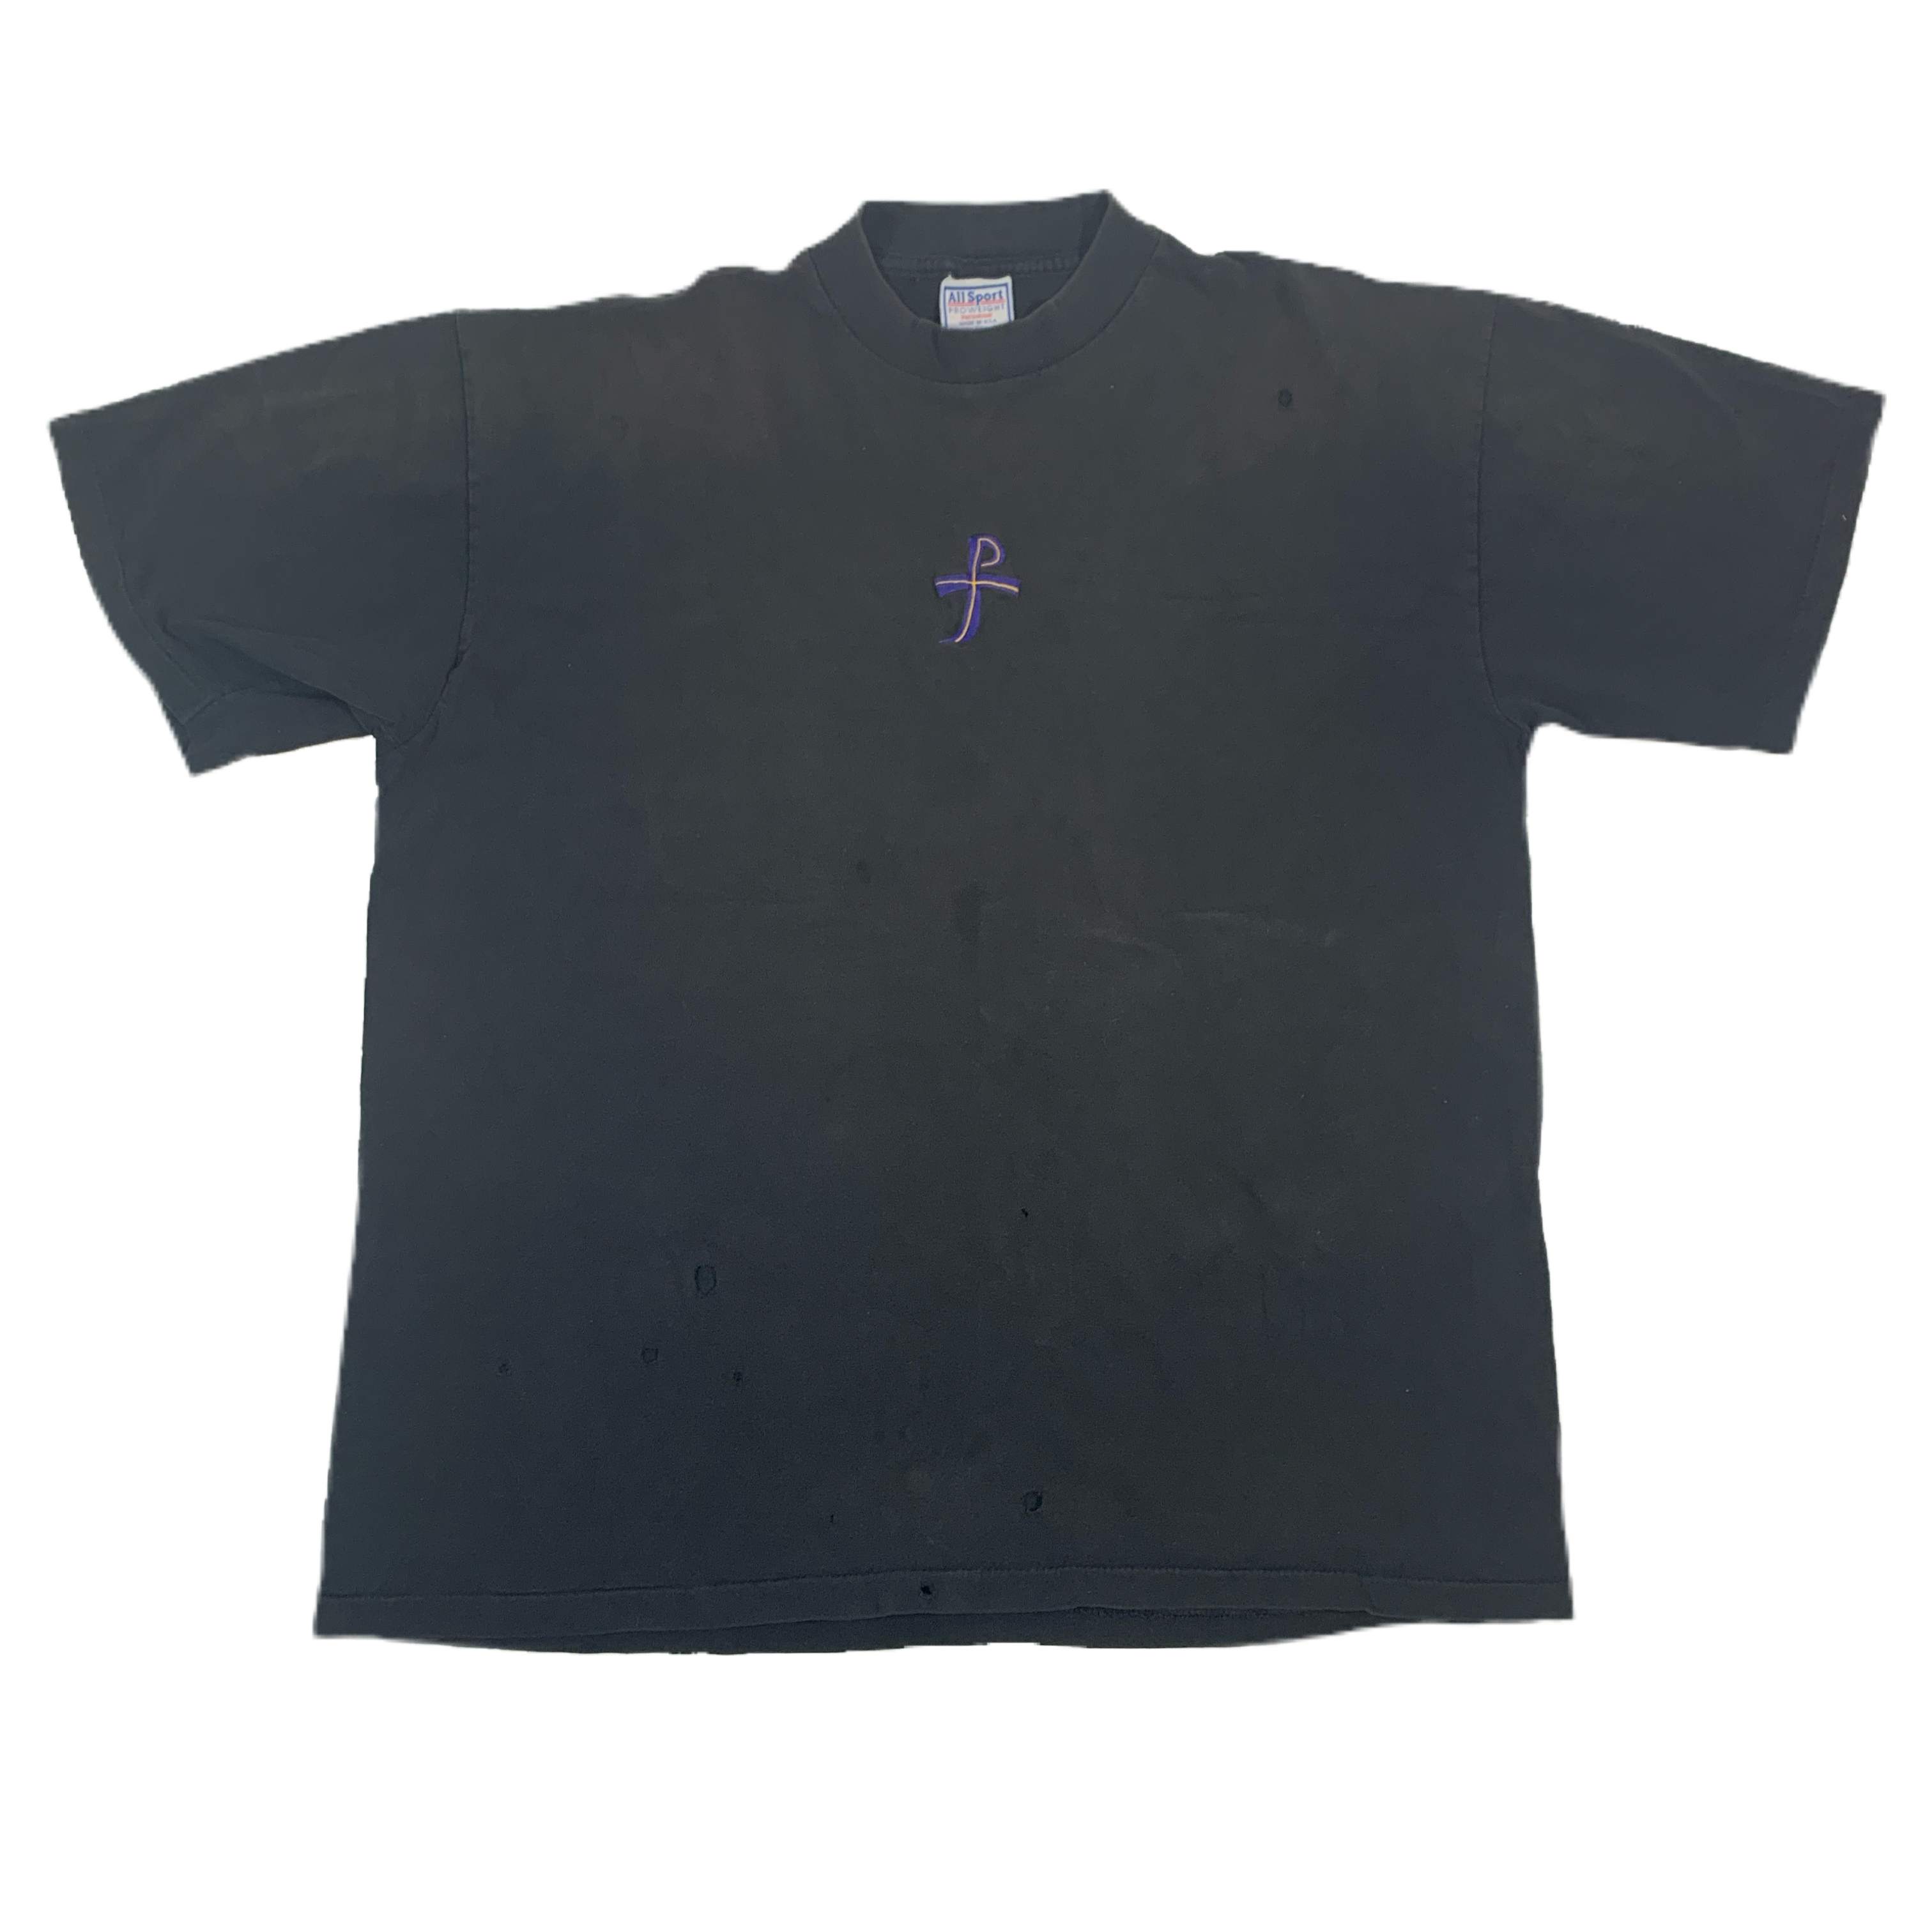 Vintage Pearl Jam “Vitalogy” Embroidered T-Shirt